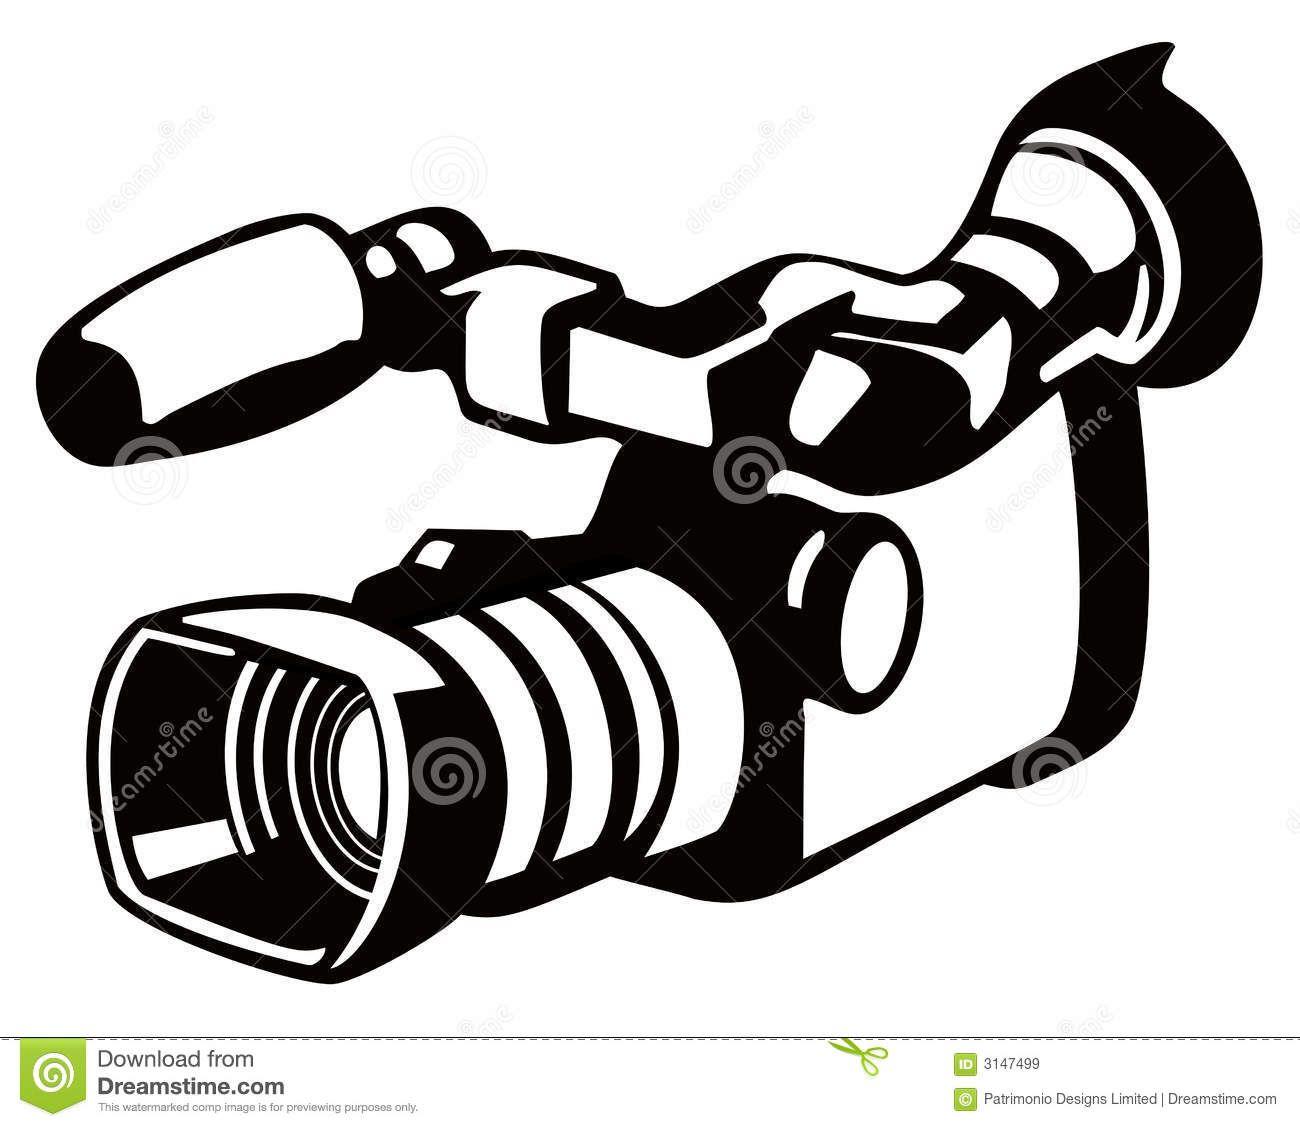 Movie Camera Logo - Movie Camera Clipart. Free download best Movie Camera Clipart